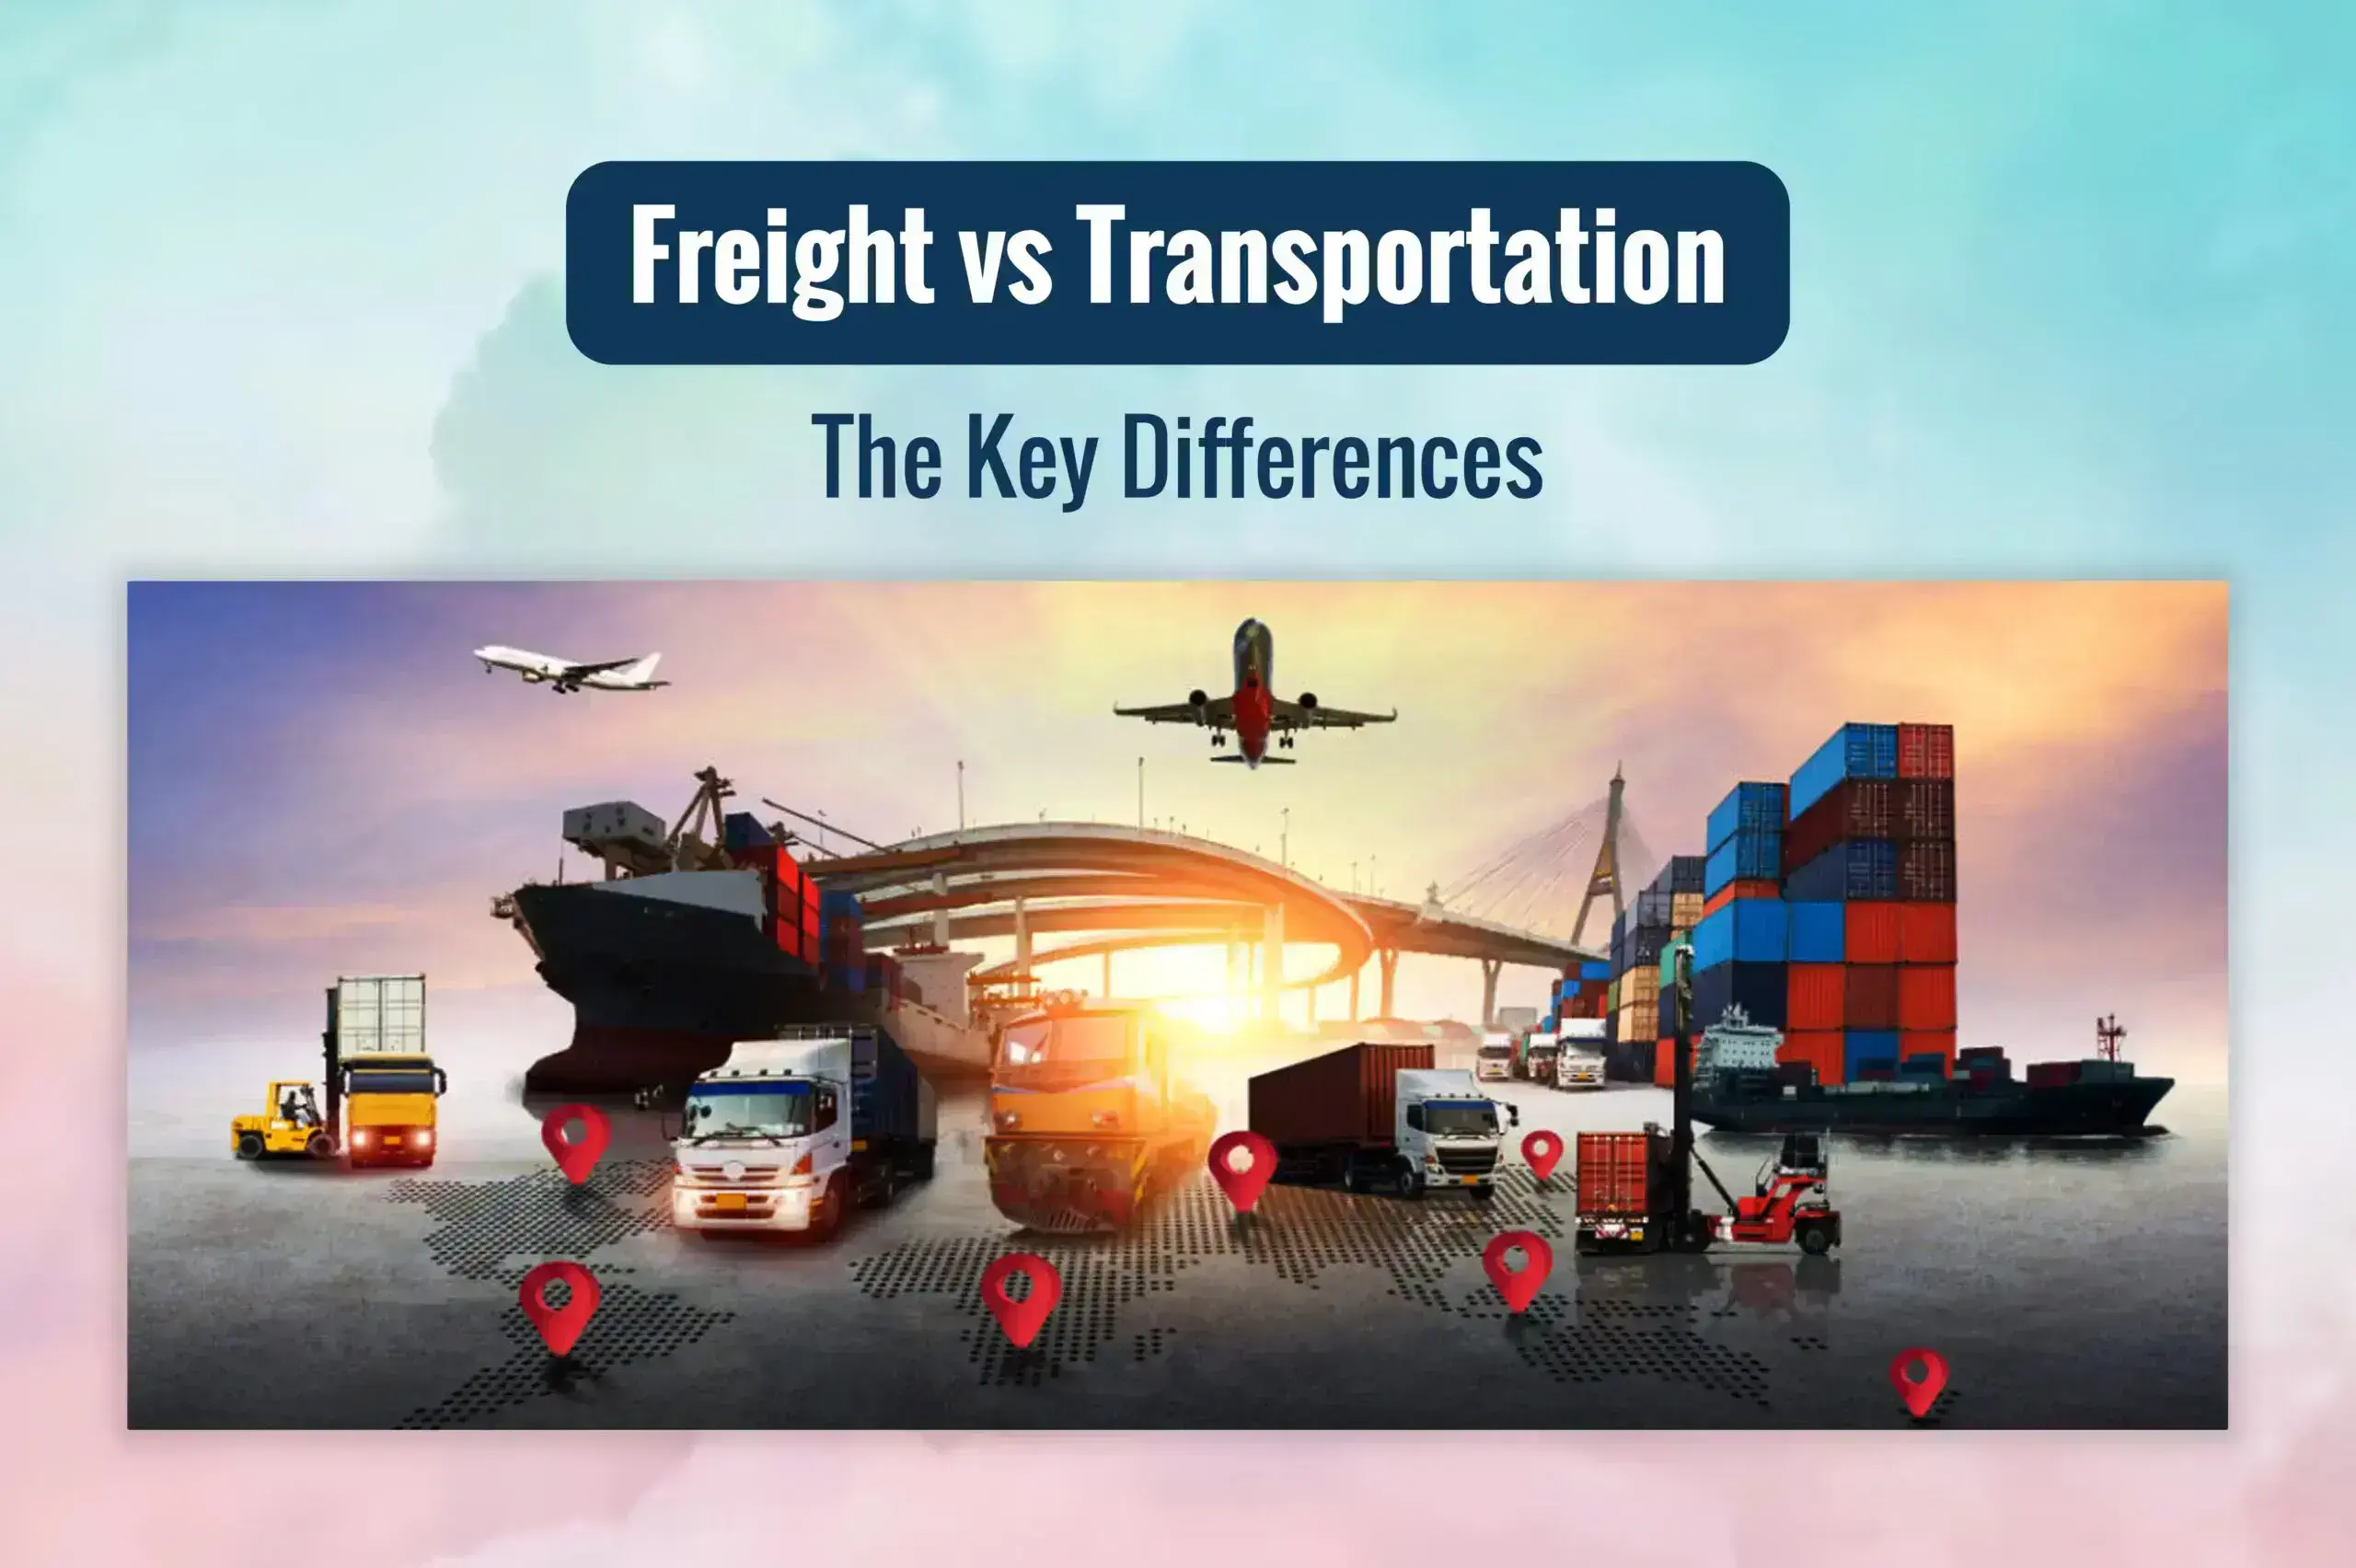 Freight-vs.-Transportation-logistics view airplane trucks ships